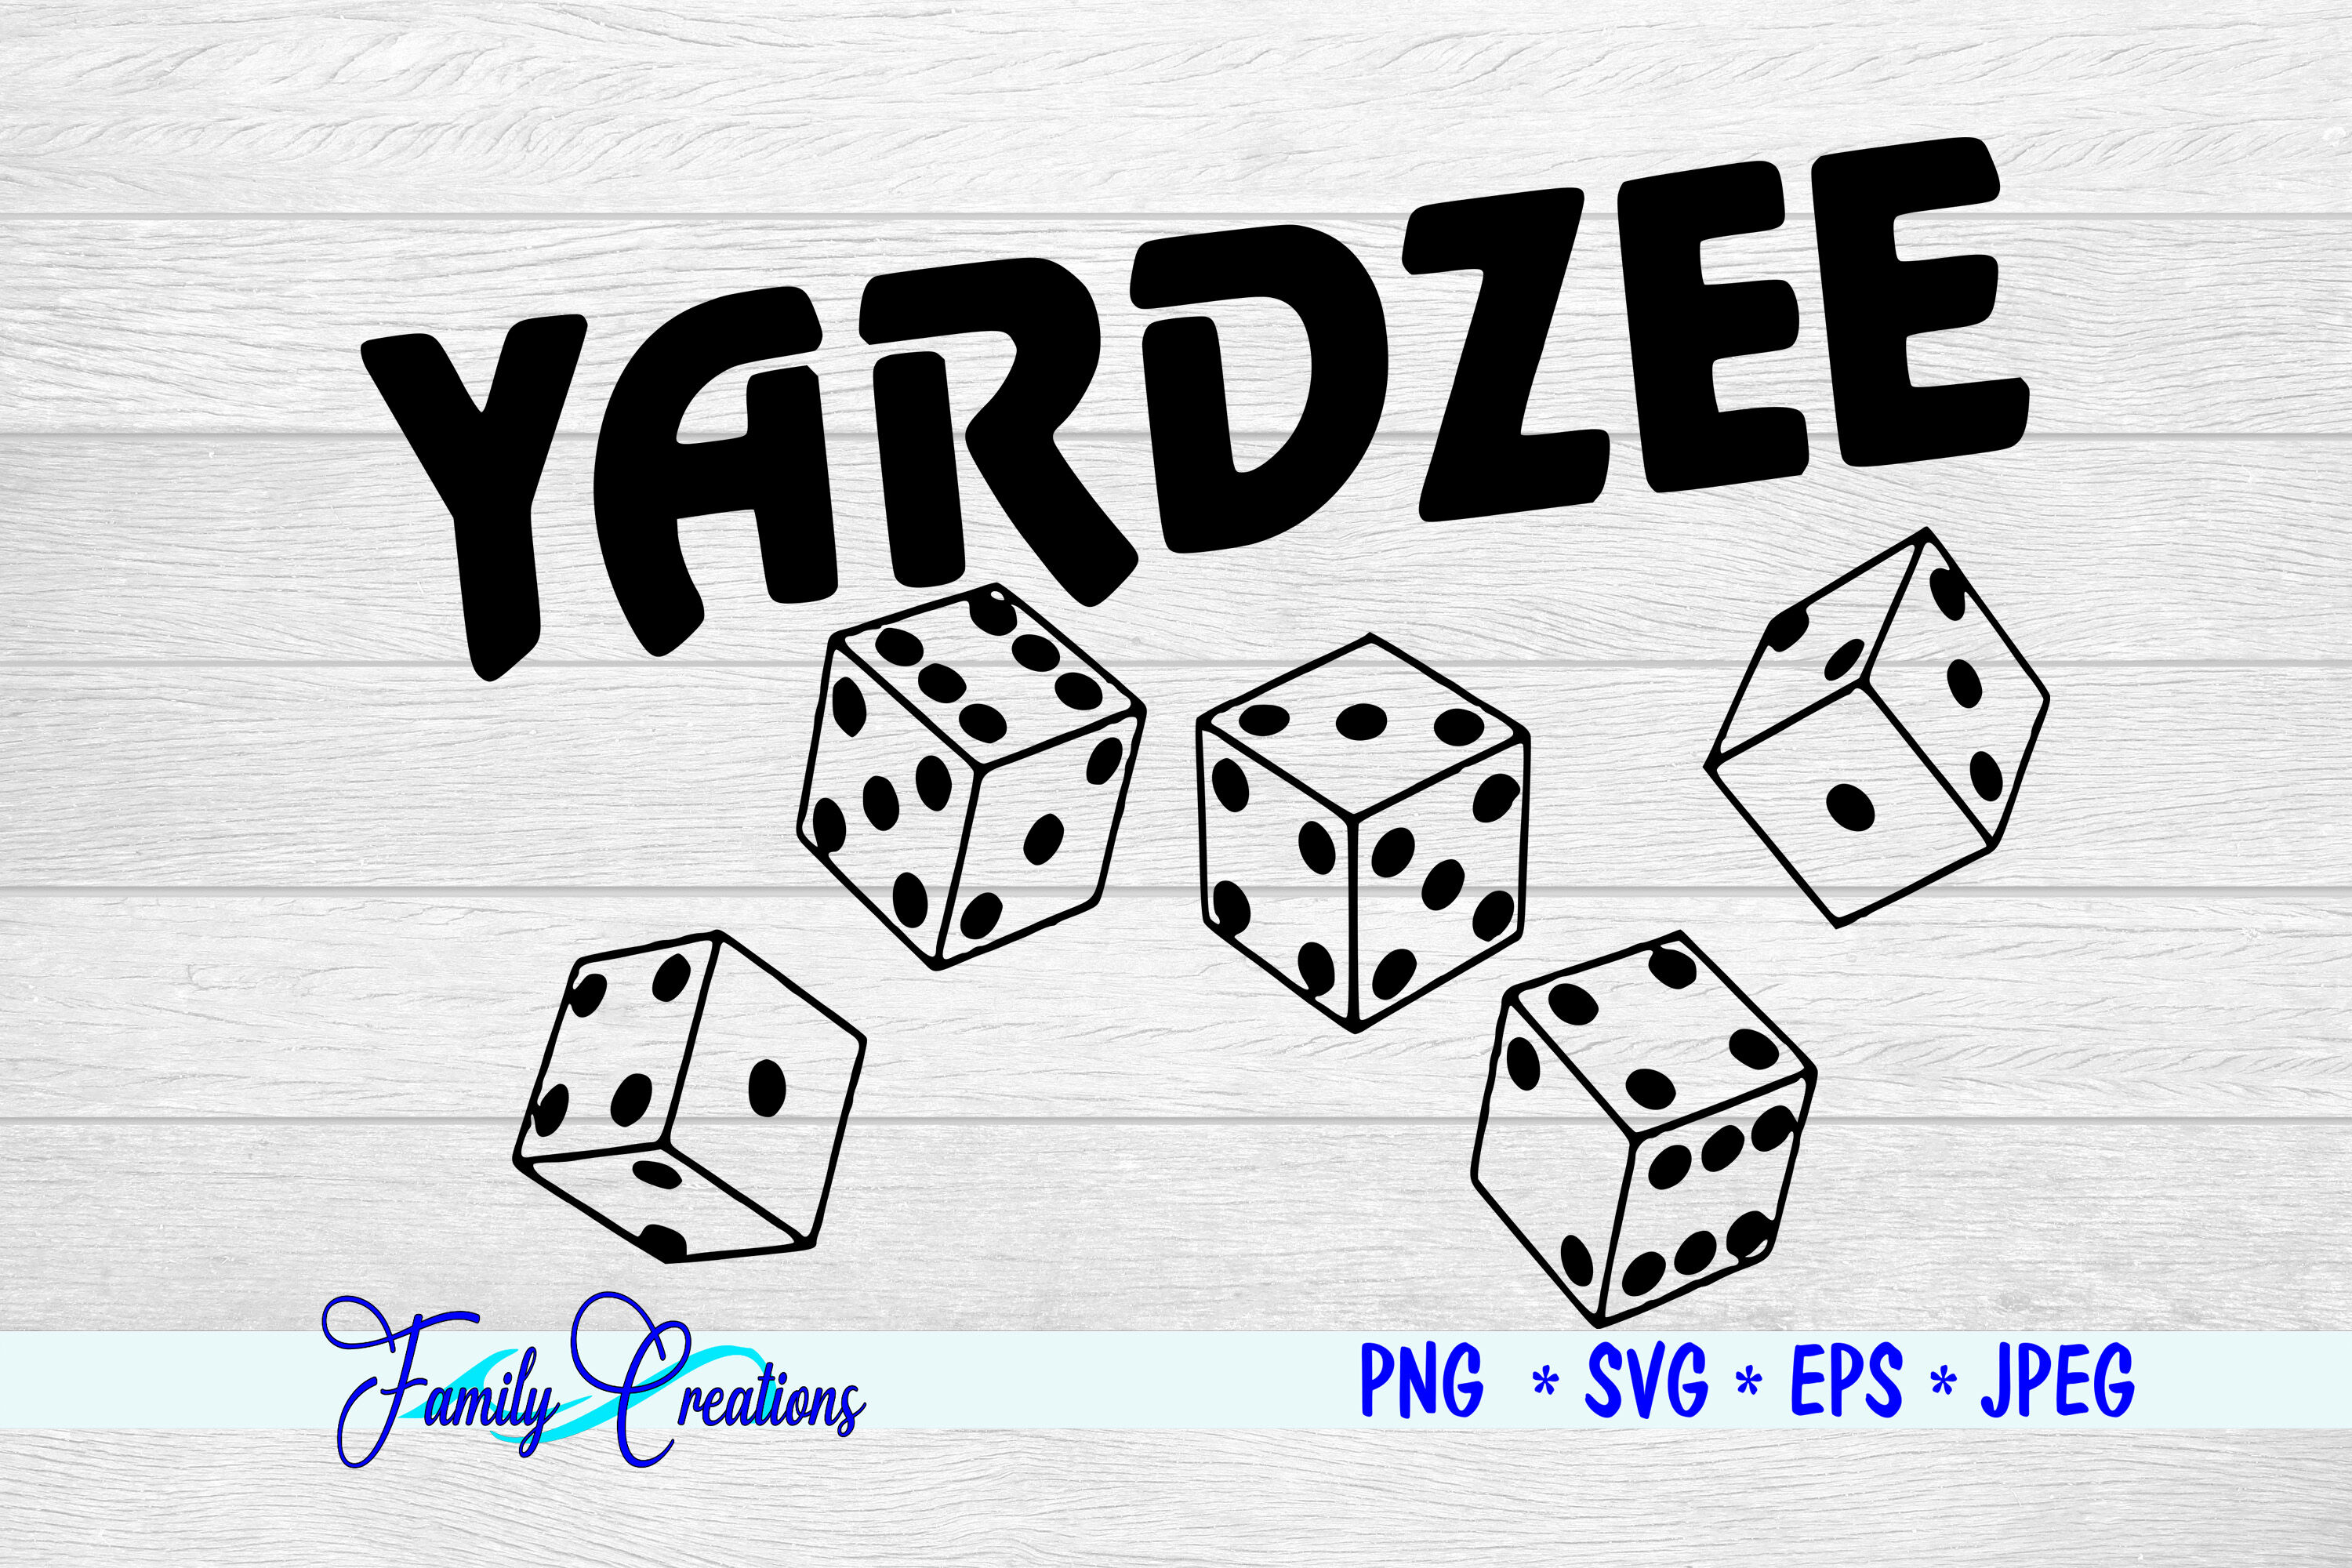 Download Yardzee Bundle By Family Creations Thehungryjpeg Com